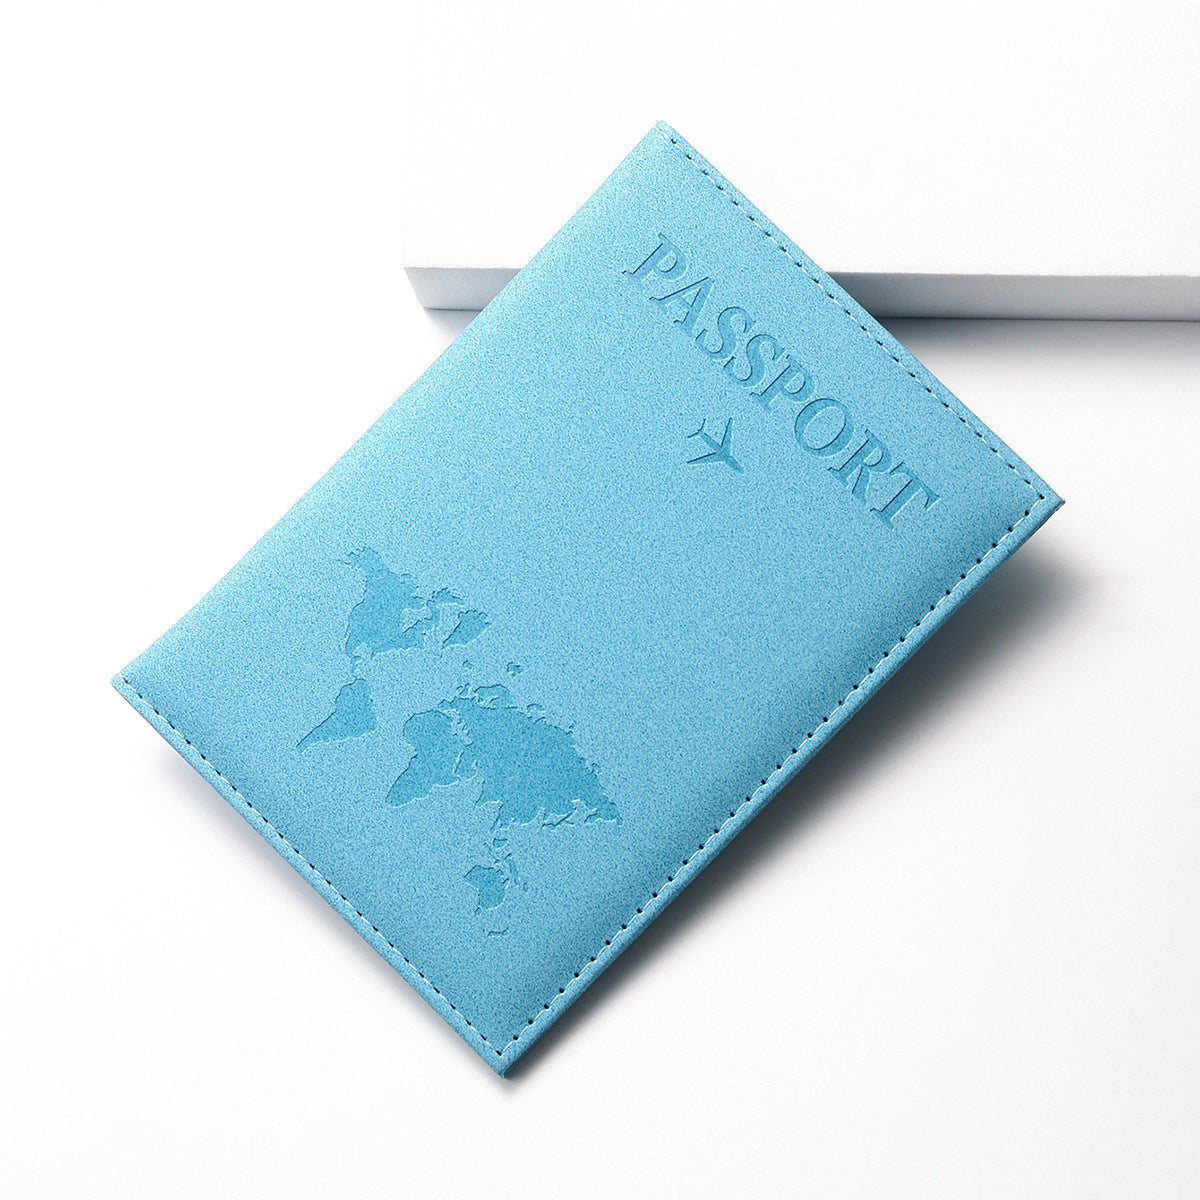 Geometric-Patterned Ultra-Light Passport Cover: Stylish Travel with Premium PU Leather